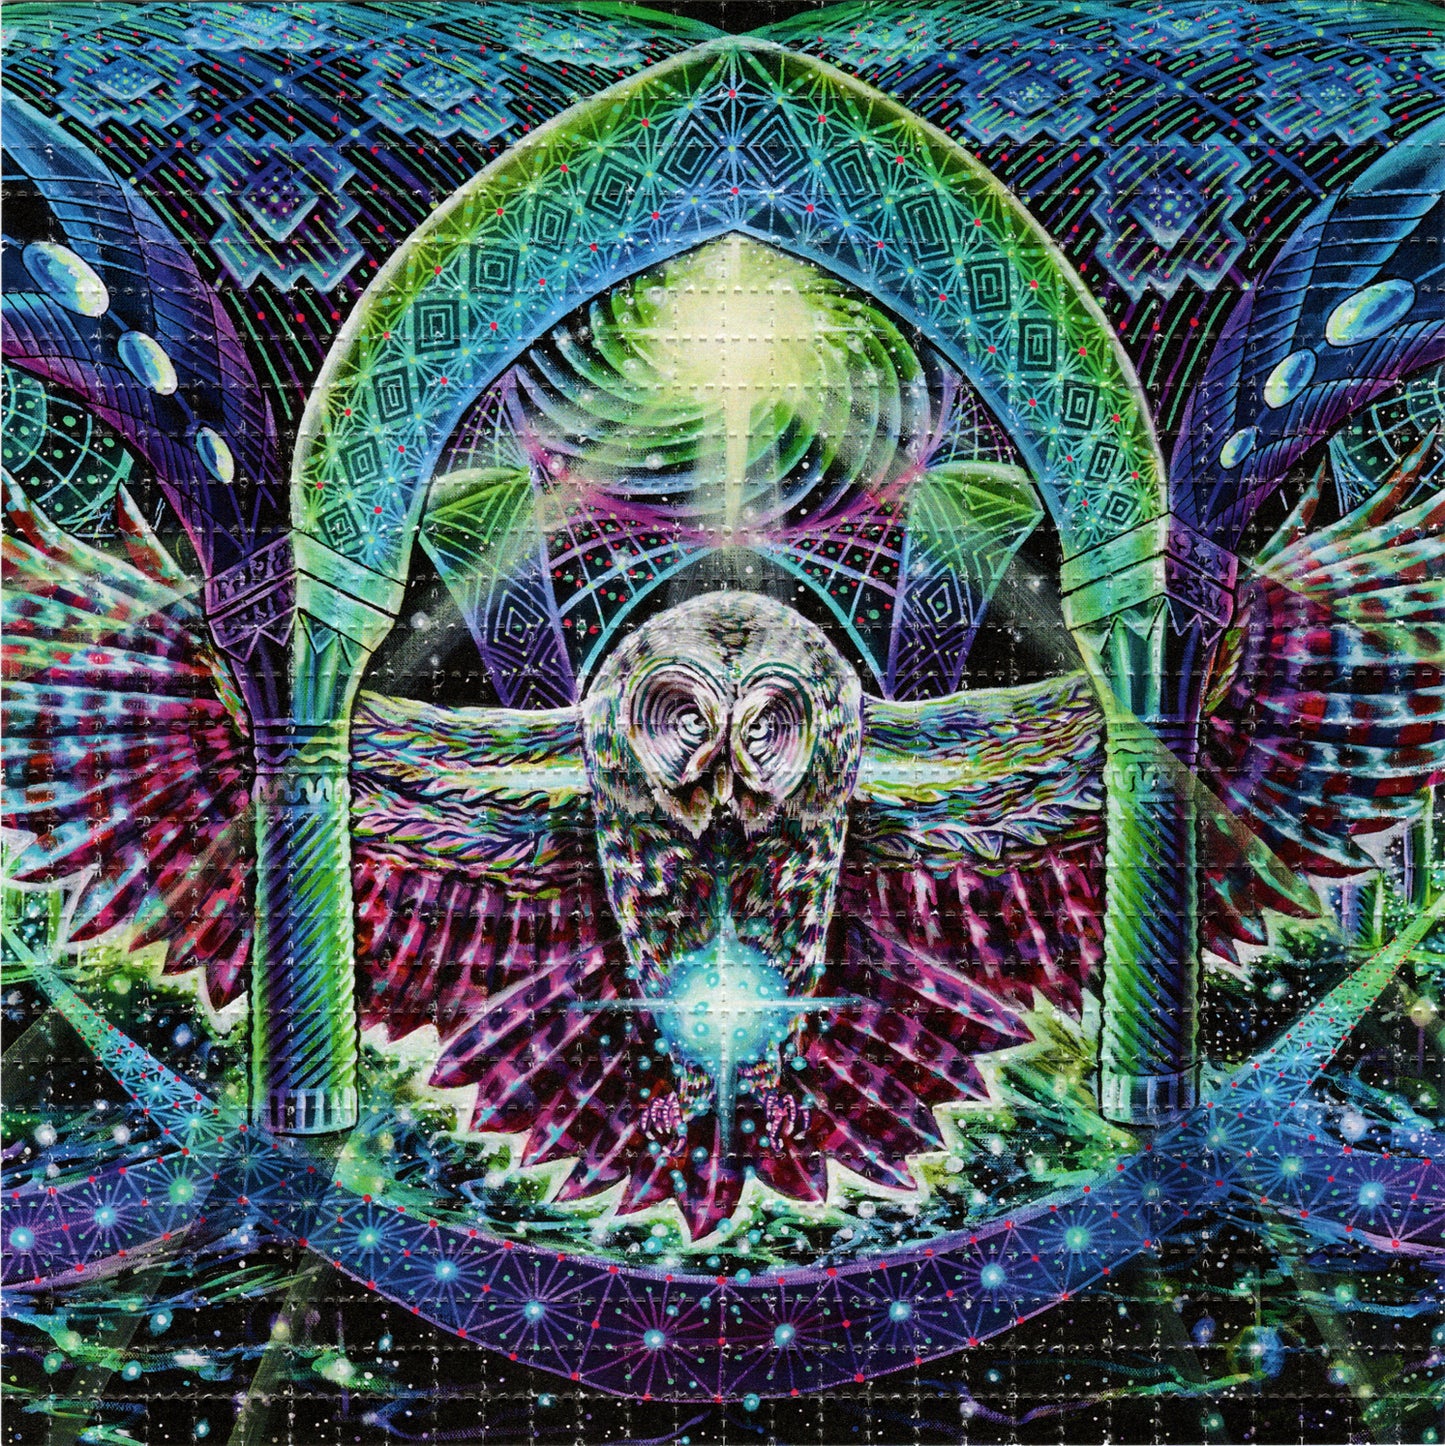 CathedrOwl by GavinGerArt Signed Limited Edition LSD blotter art print